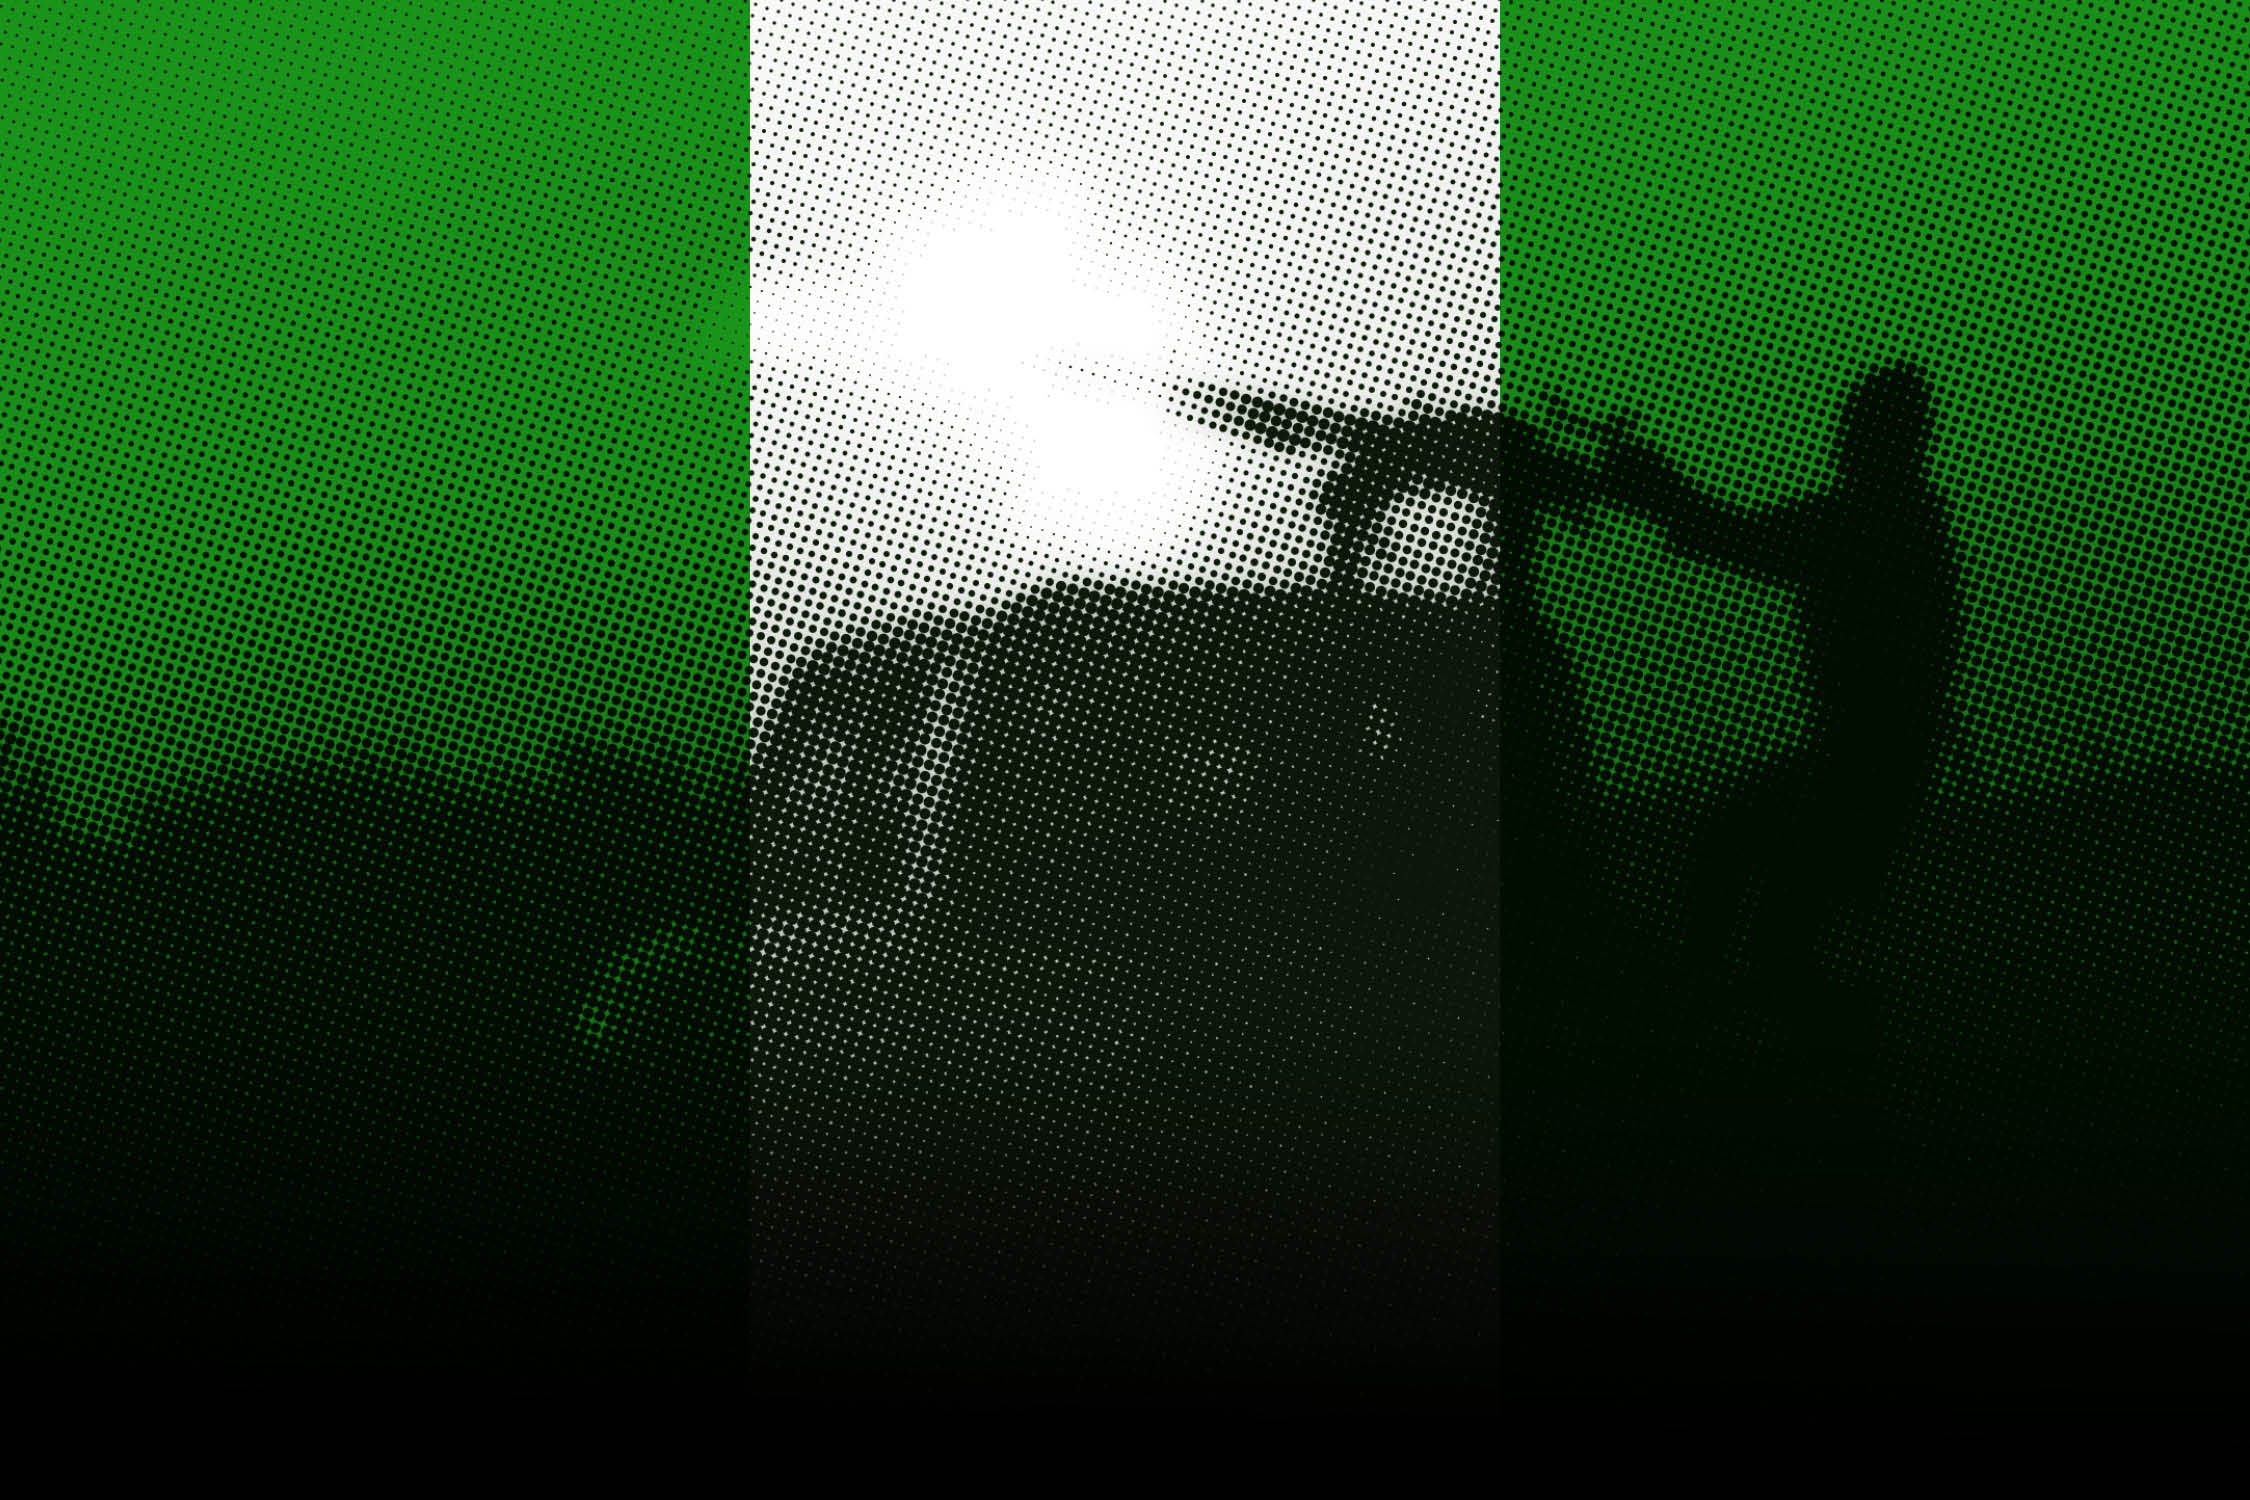 Nigeria’s military struggles with Islamic State